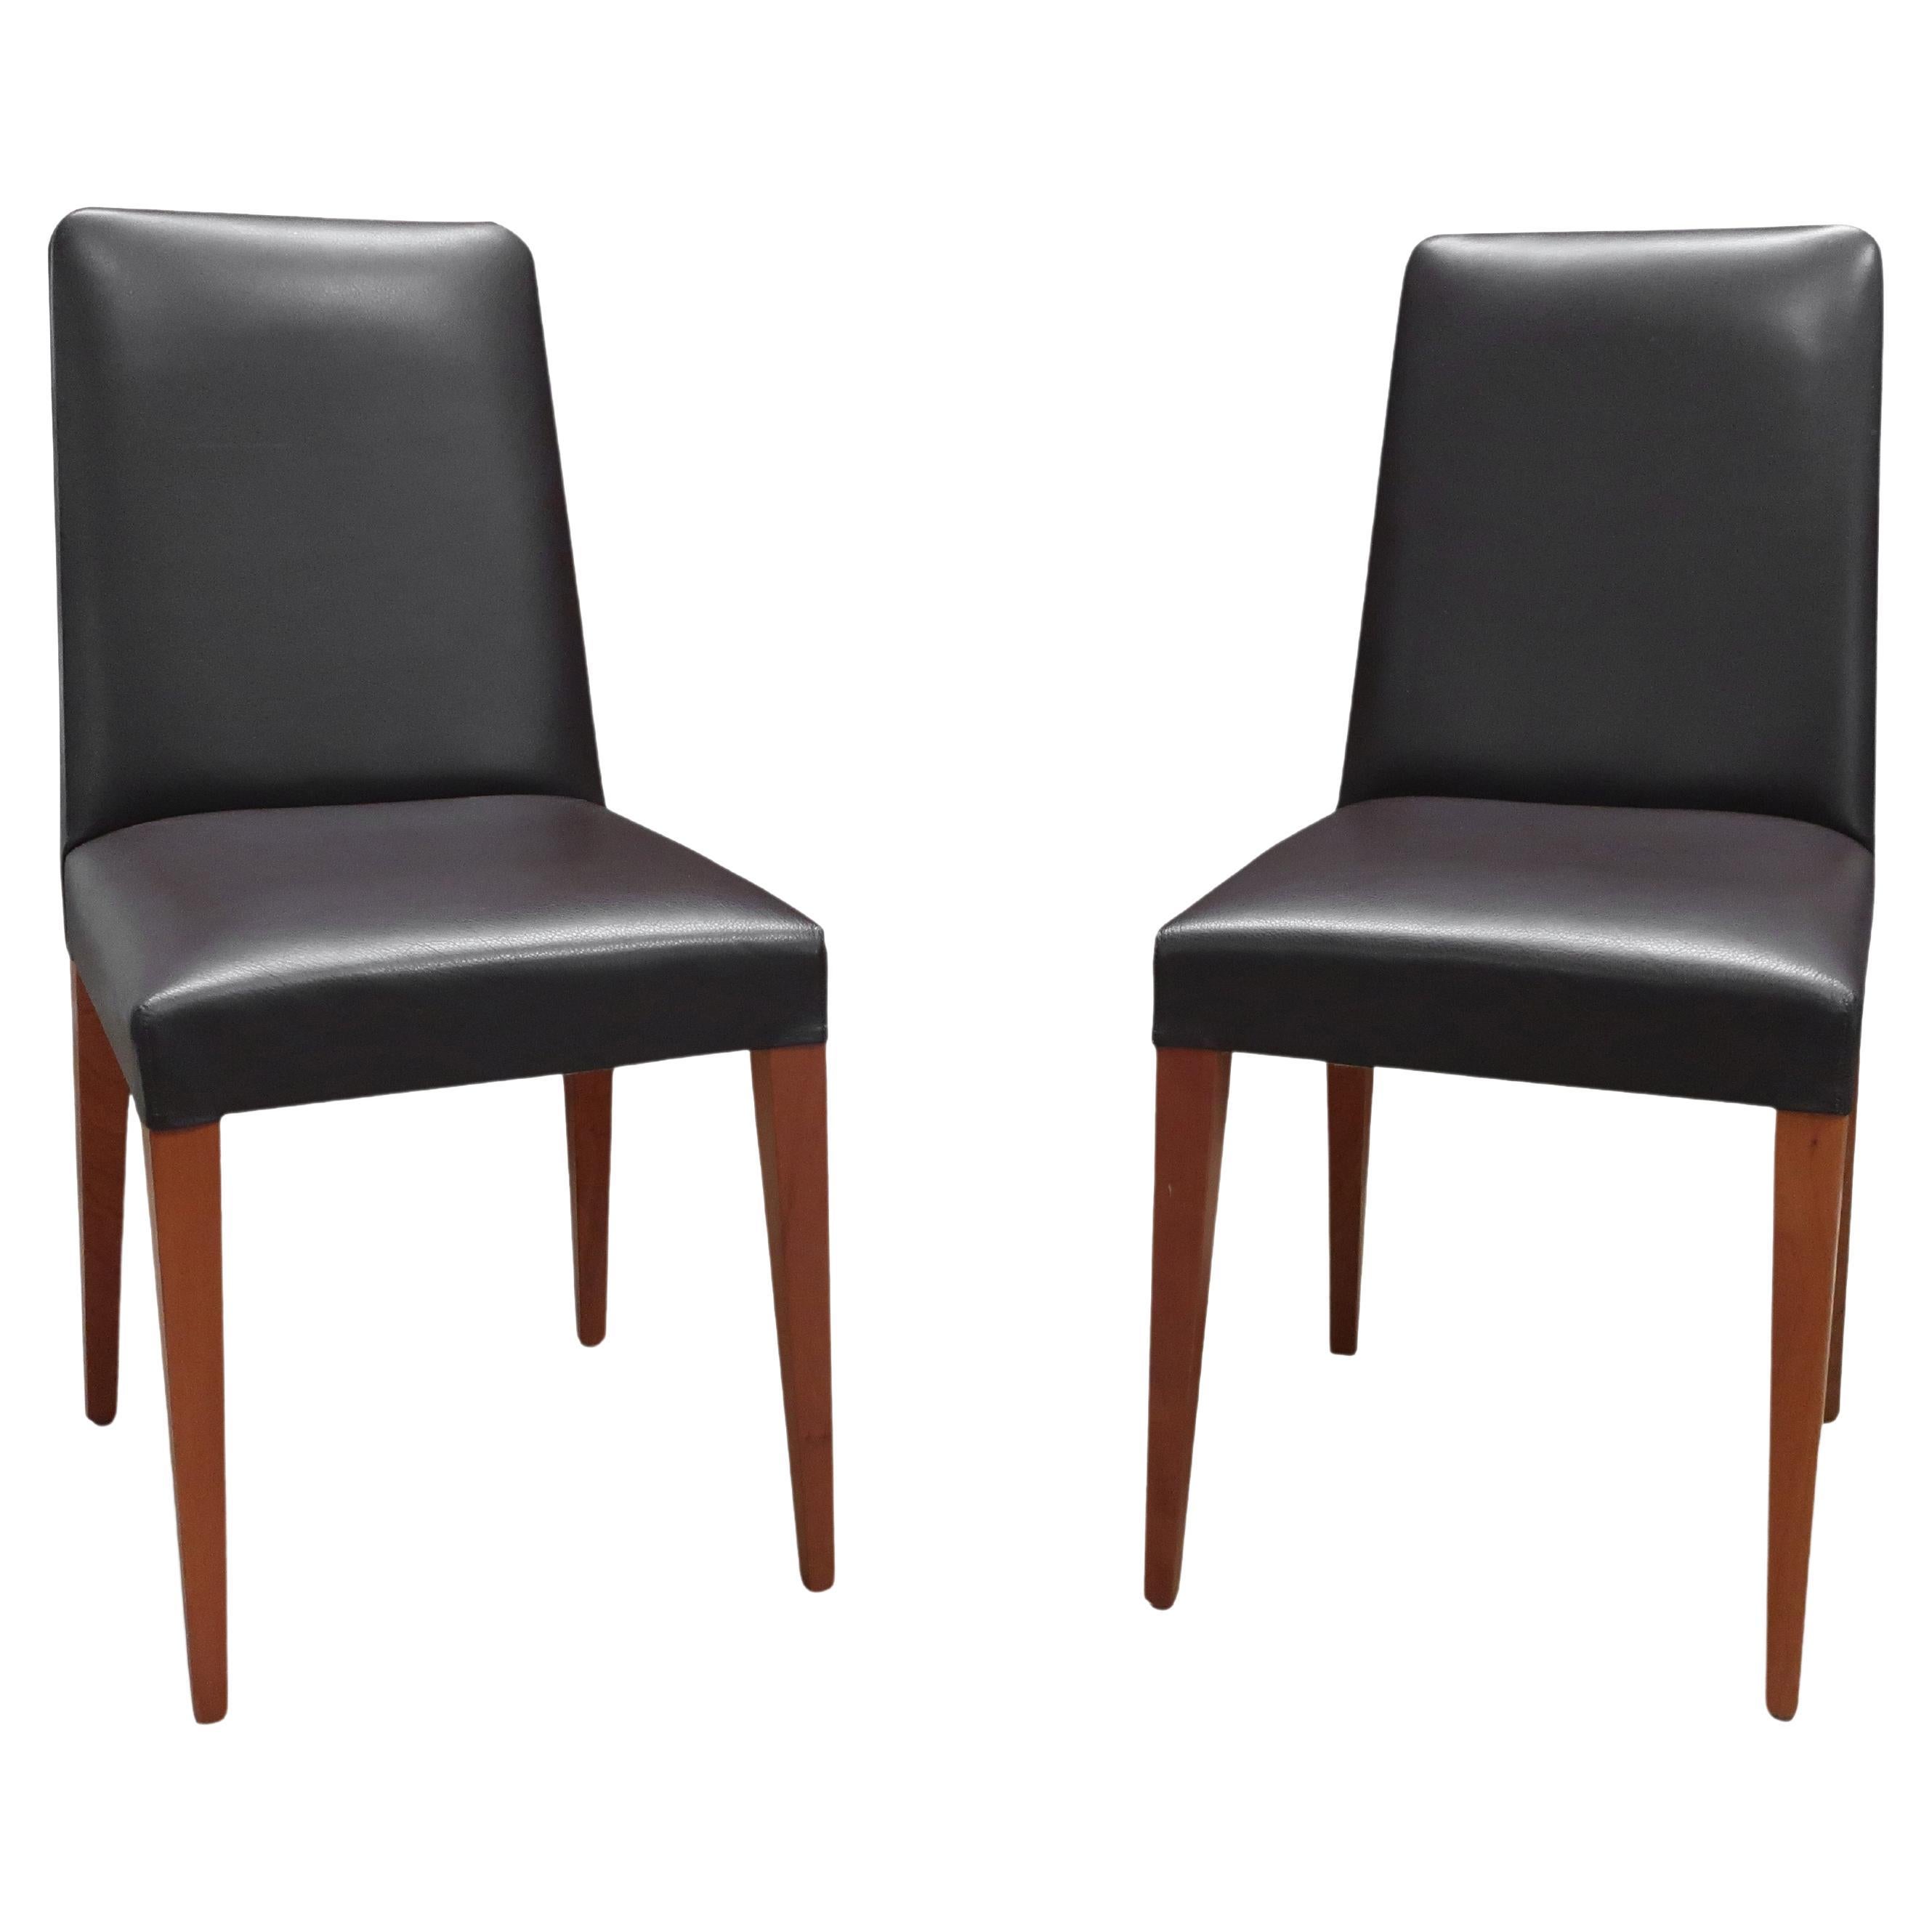 Pair of Brown Leather "Classic Chair" by Roberto Lazzeroni for Ceccotti Collezio